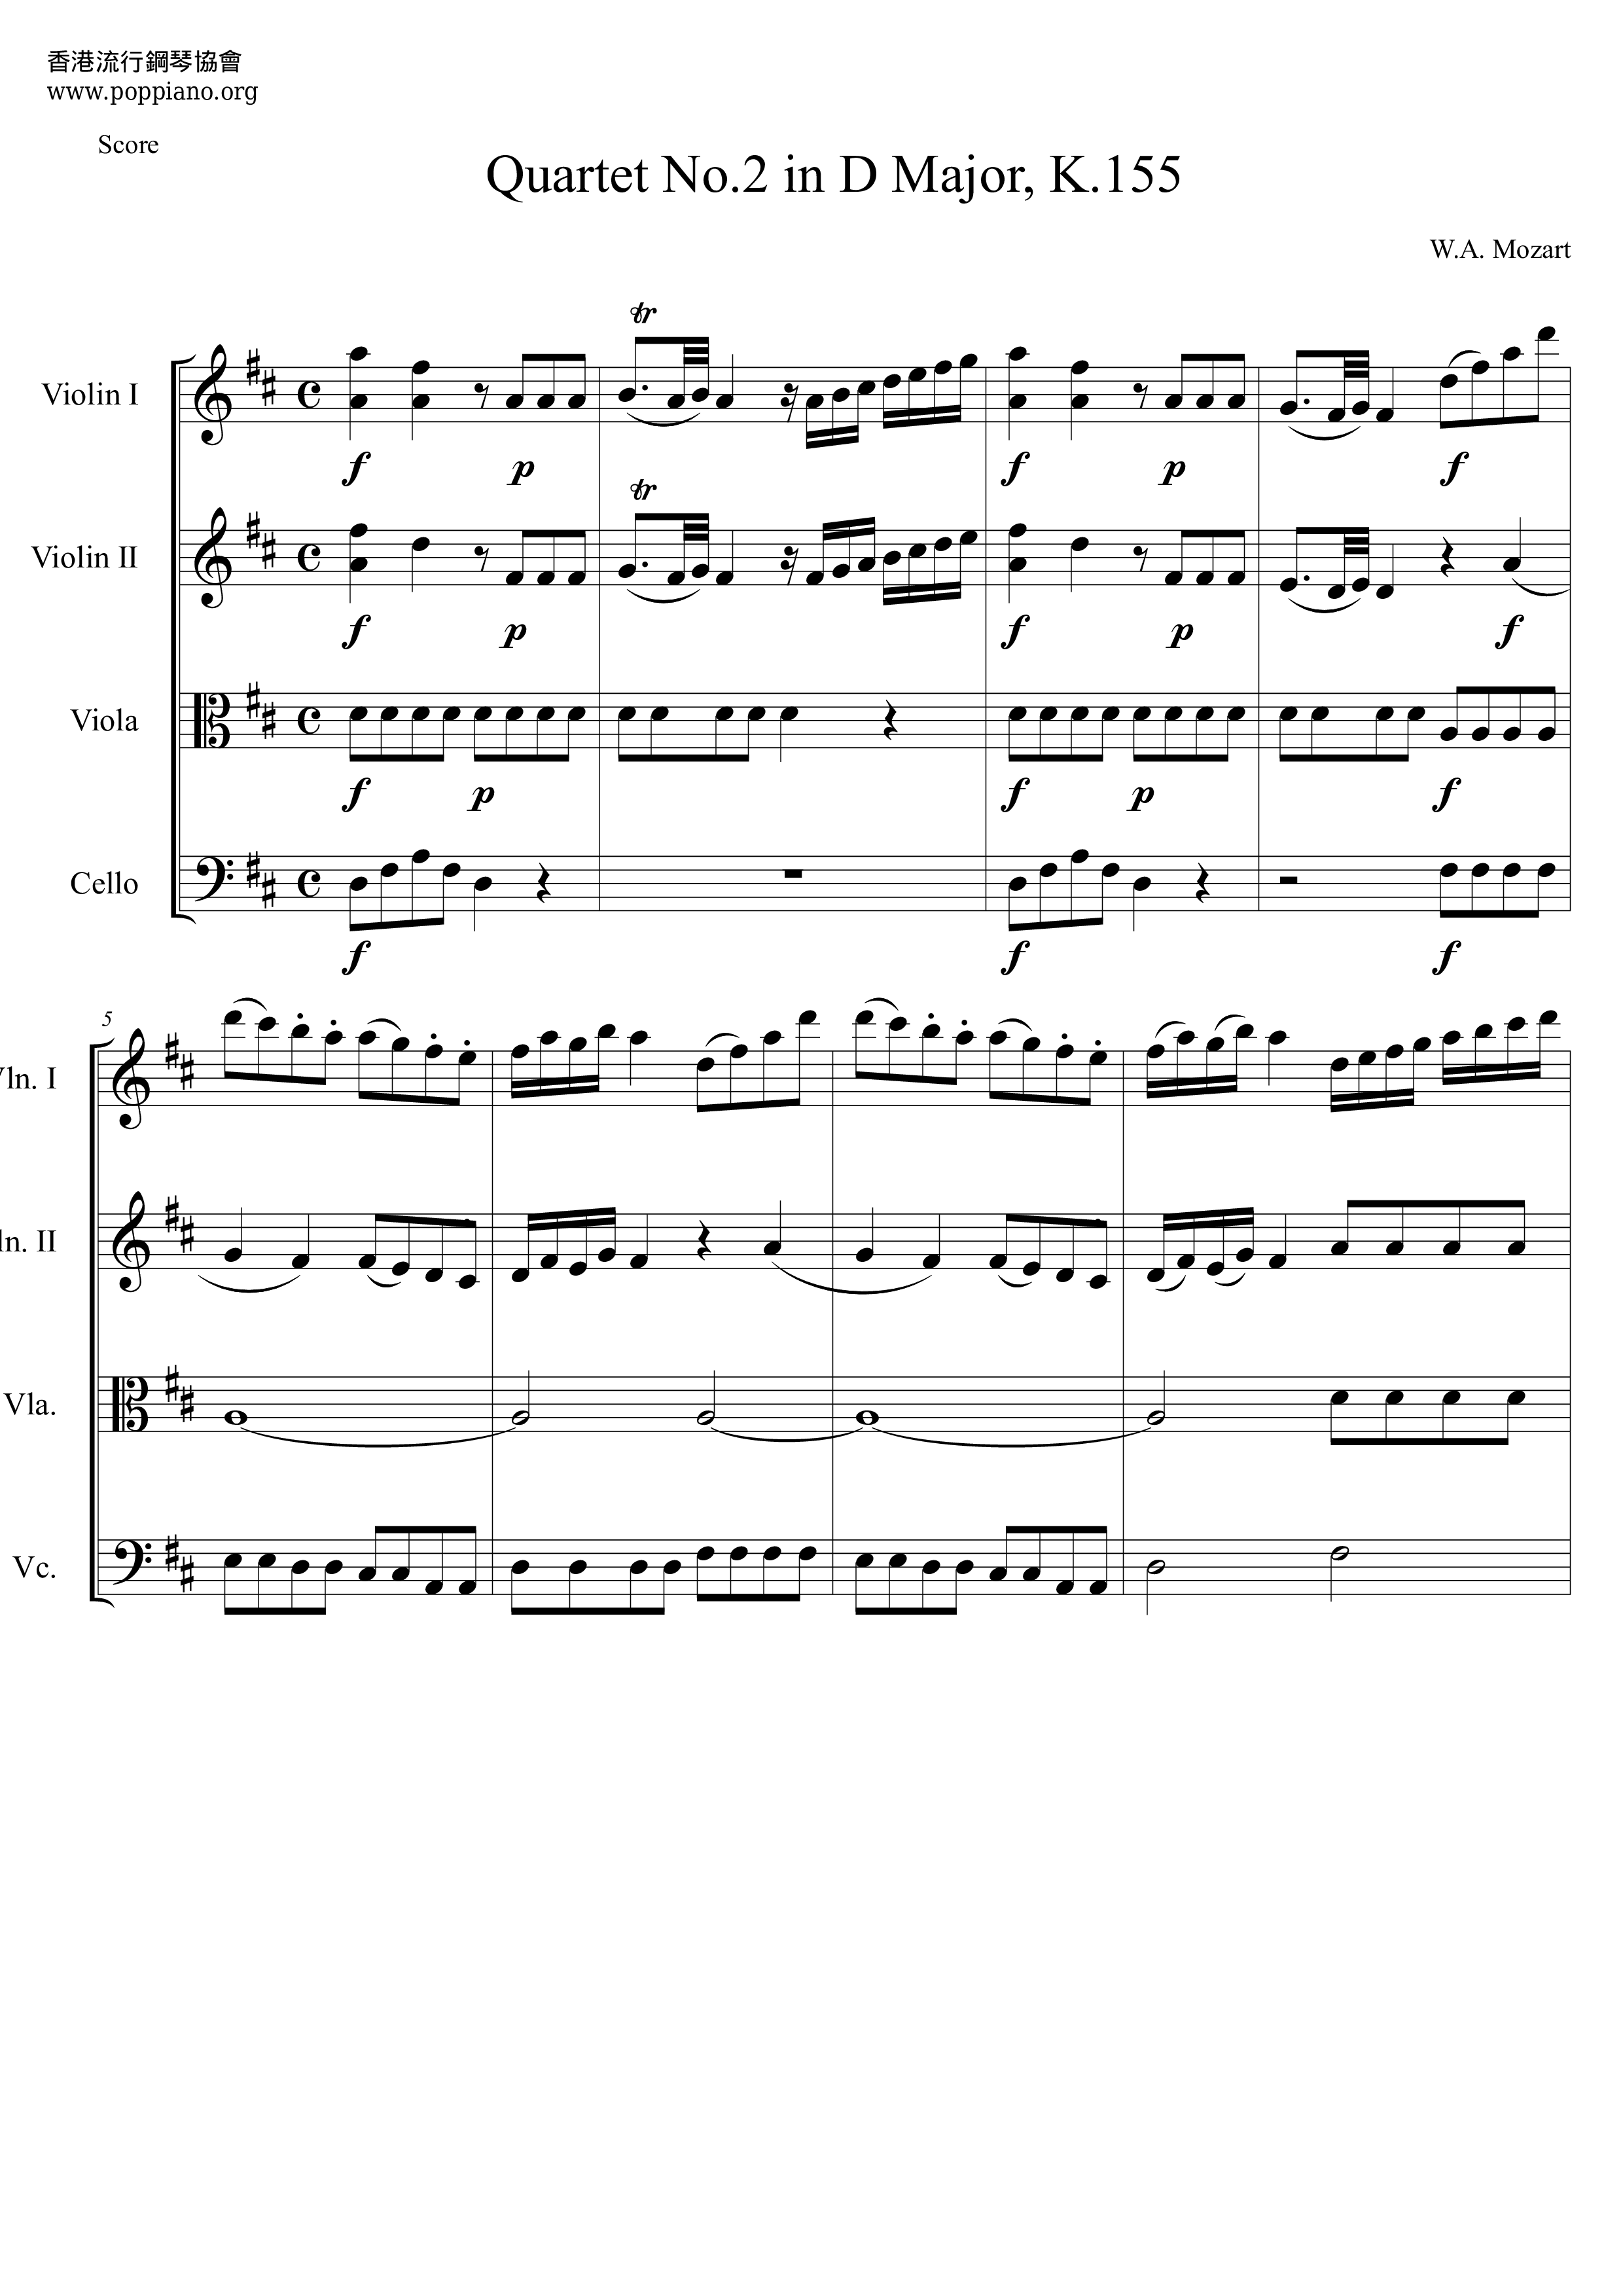 Quartet No.2 In D Major, K. 155 Movement 1 Score